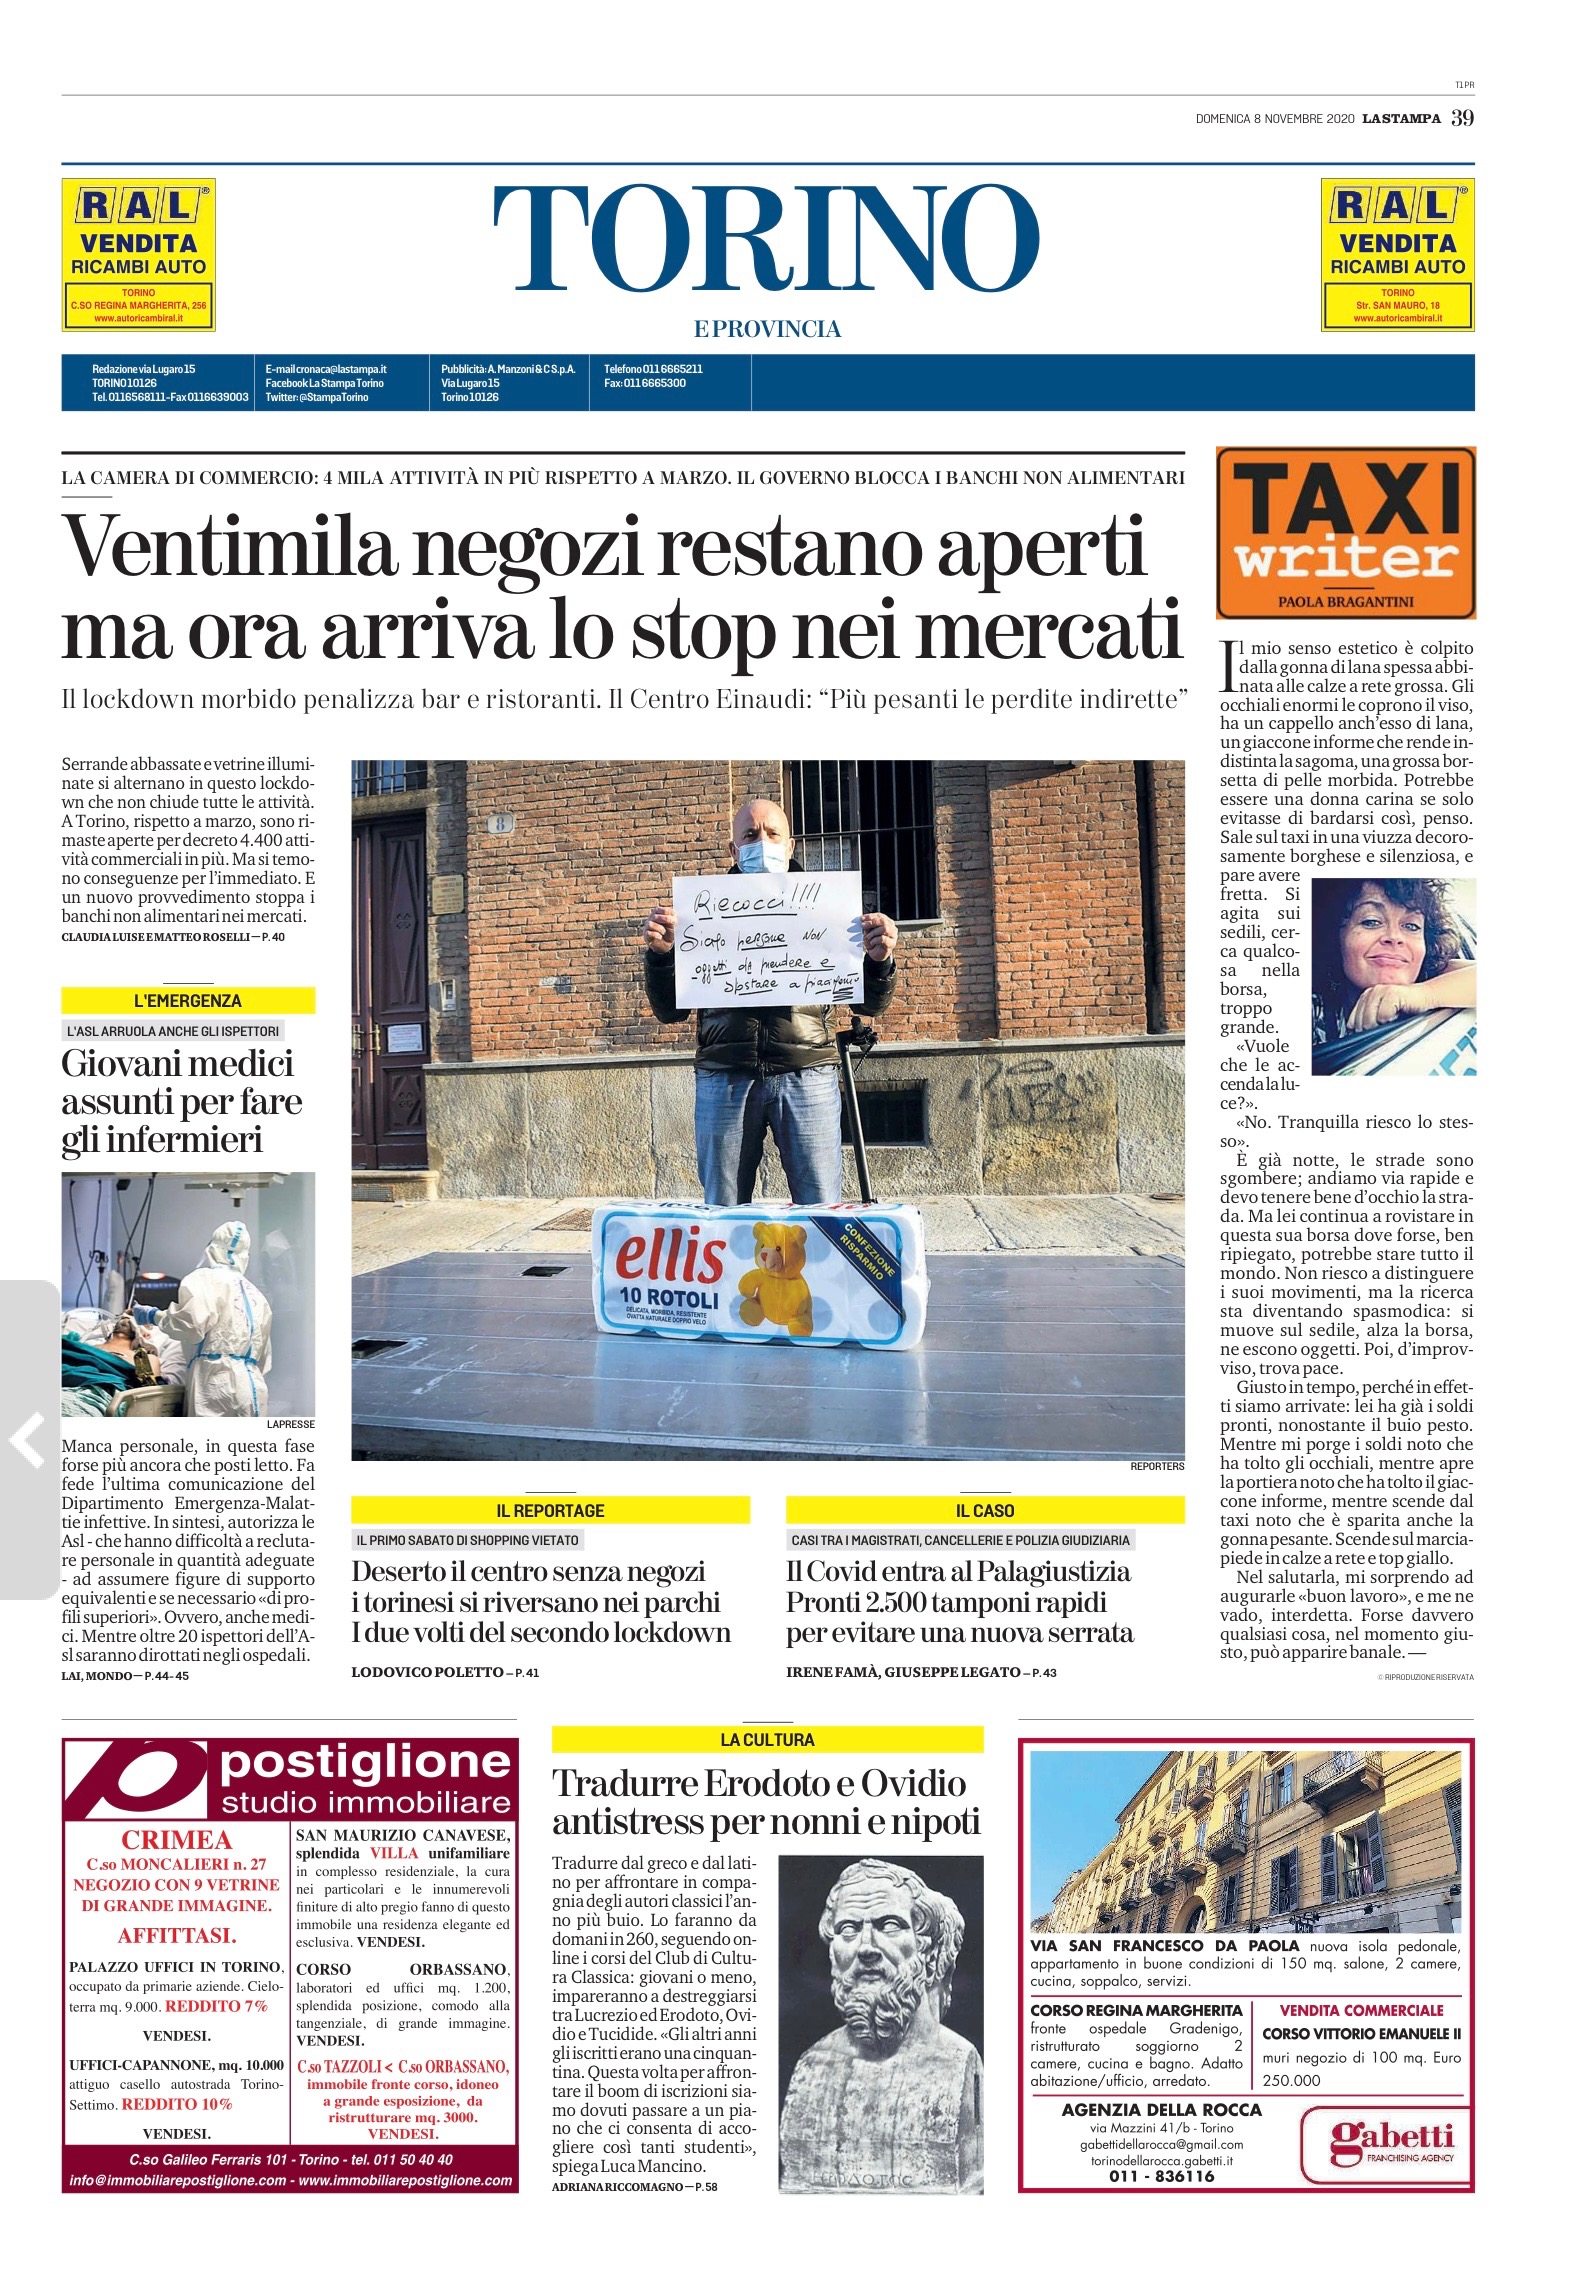 La Stampa, (39), 8.11.2020